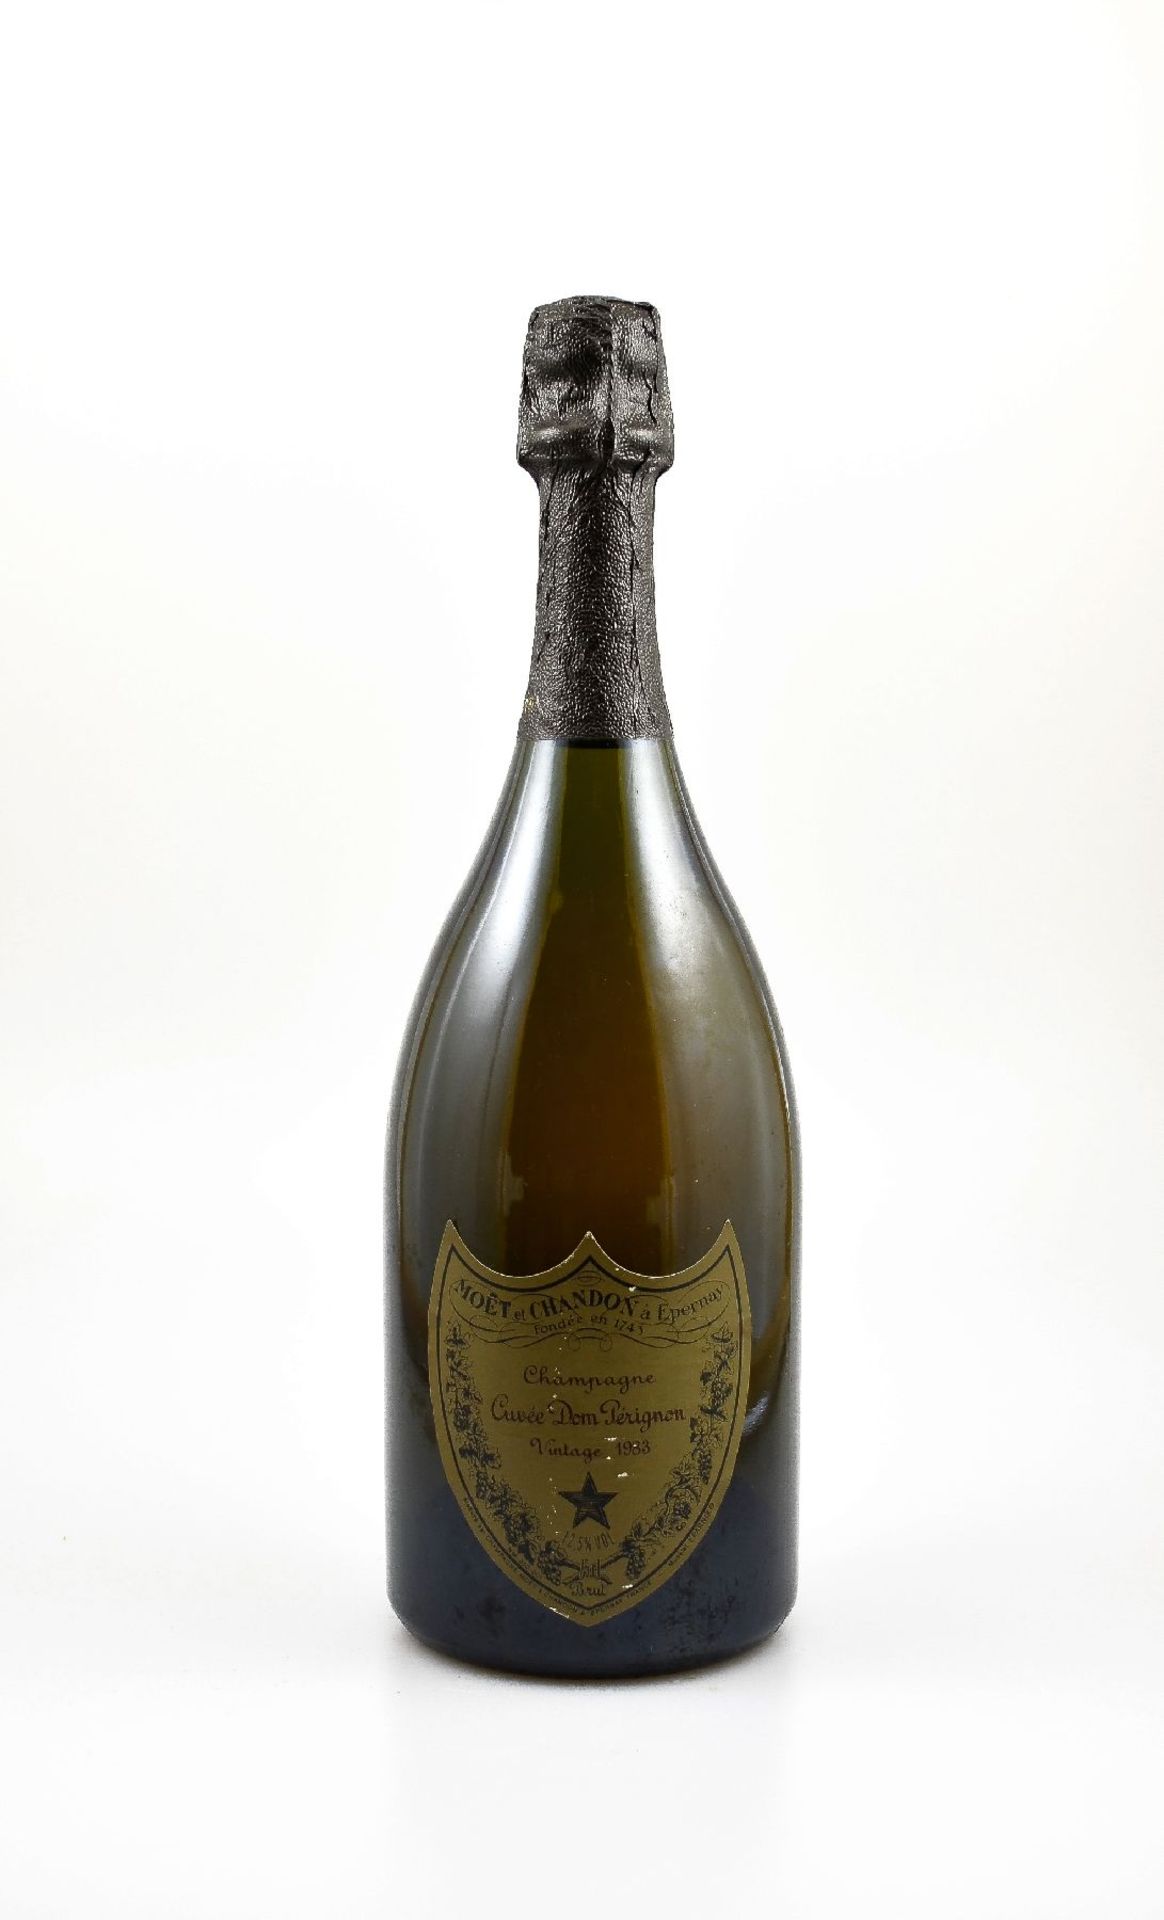 1 bottle 1983 Dom Perignon, Champagne, Brut, approx 75 cl, 12,5 % Vol., distance between bottle